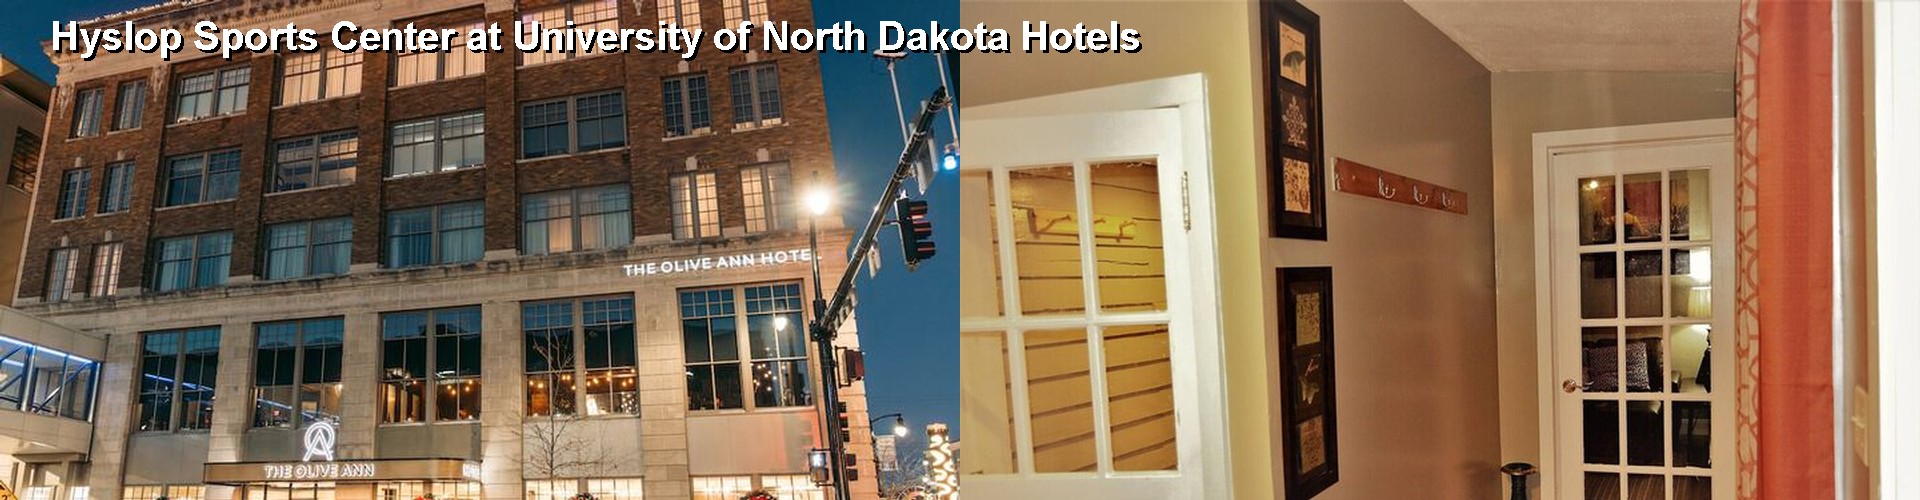 5 Best Hotels near Hyslop Sports Center at University of North Dakota